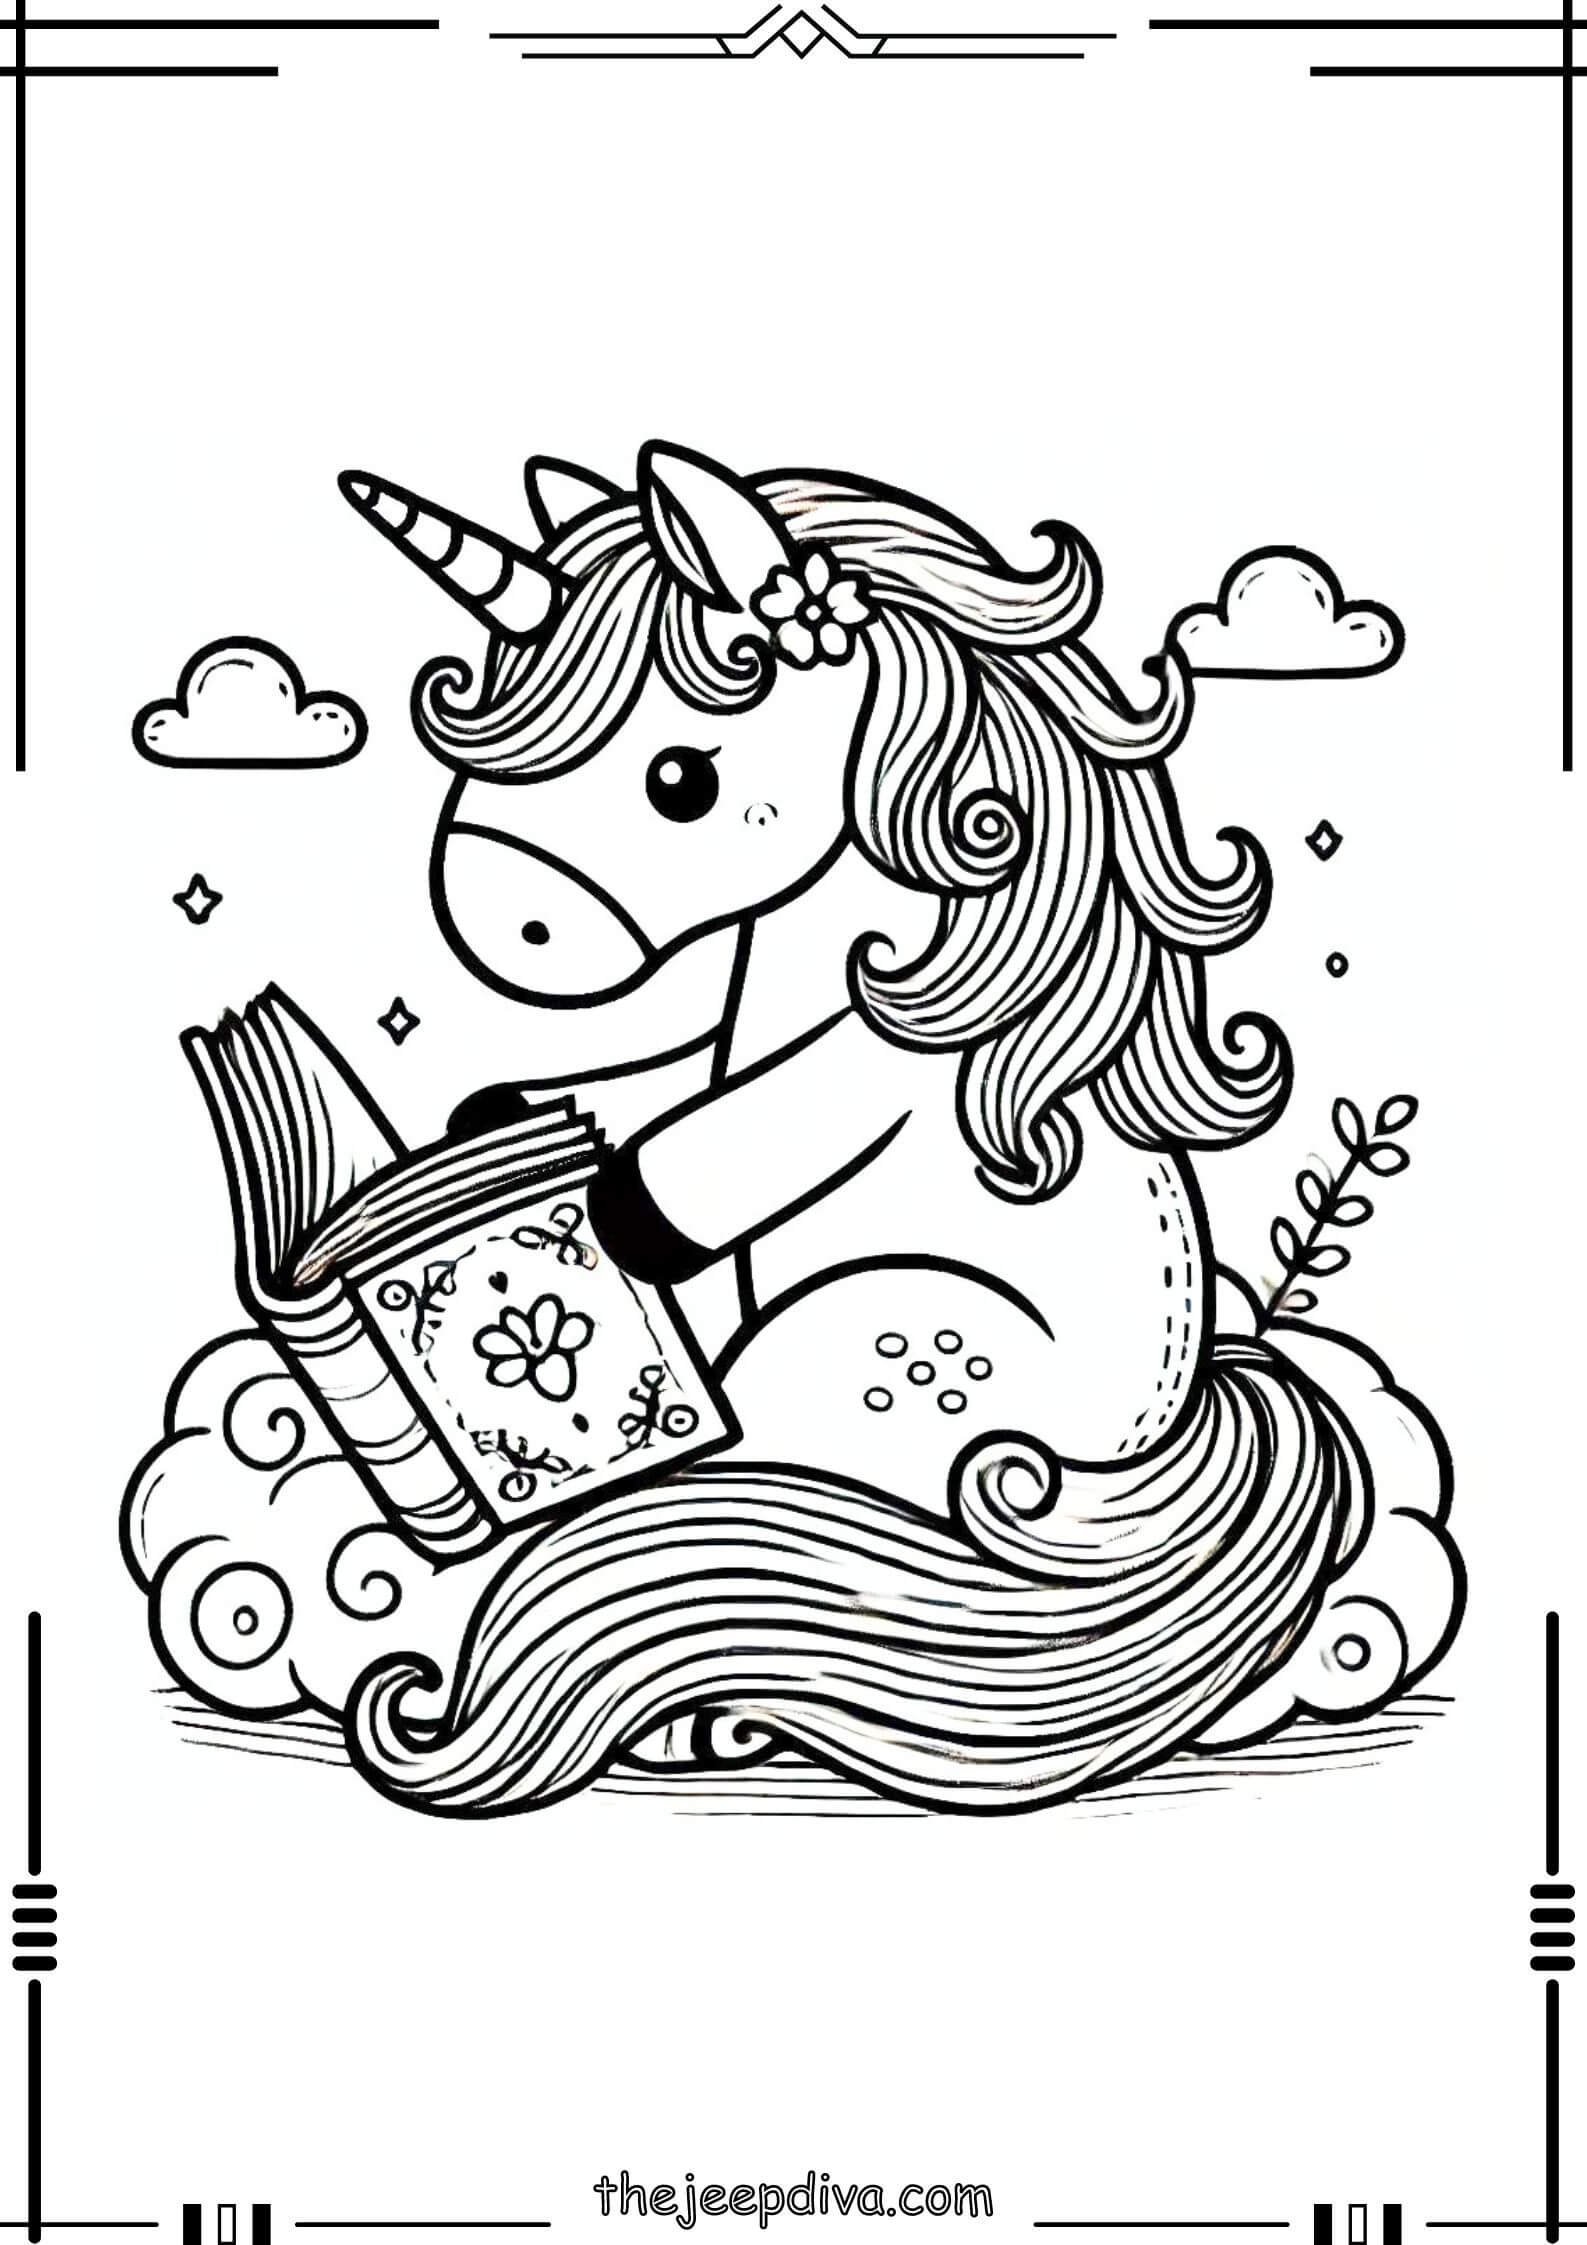 unicorn-coloring-page-medium-19